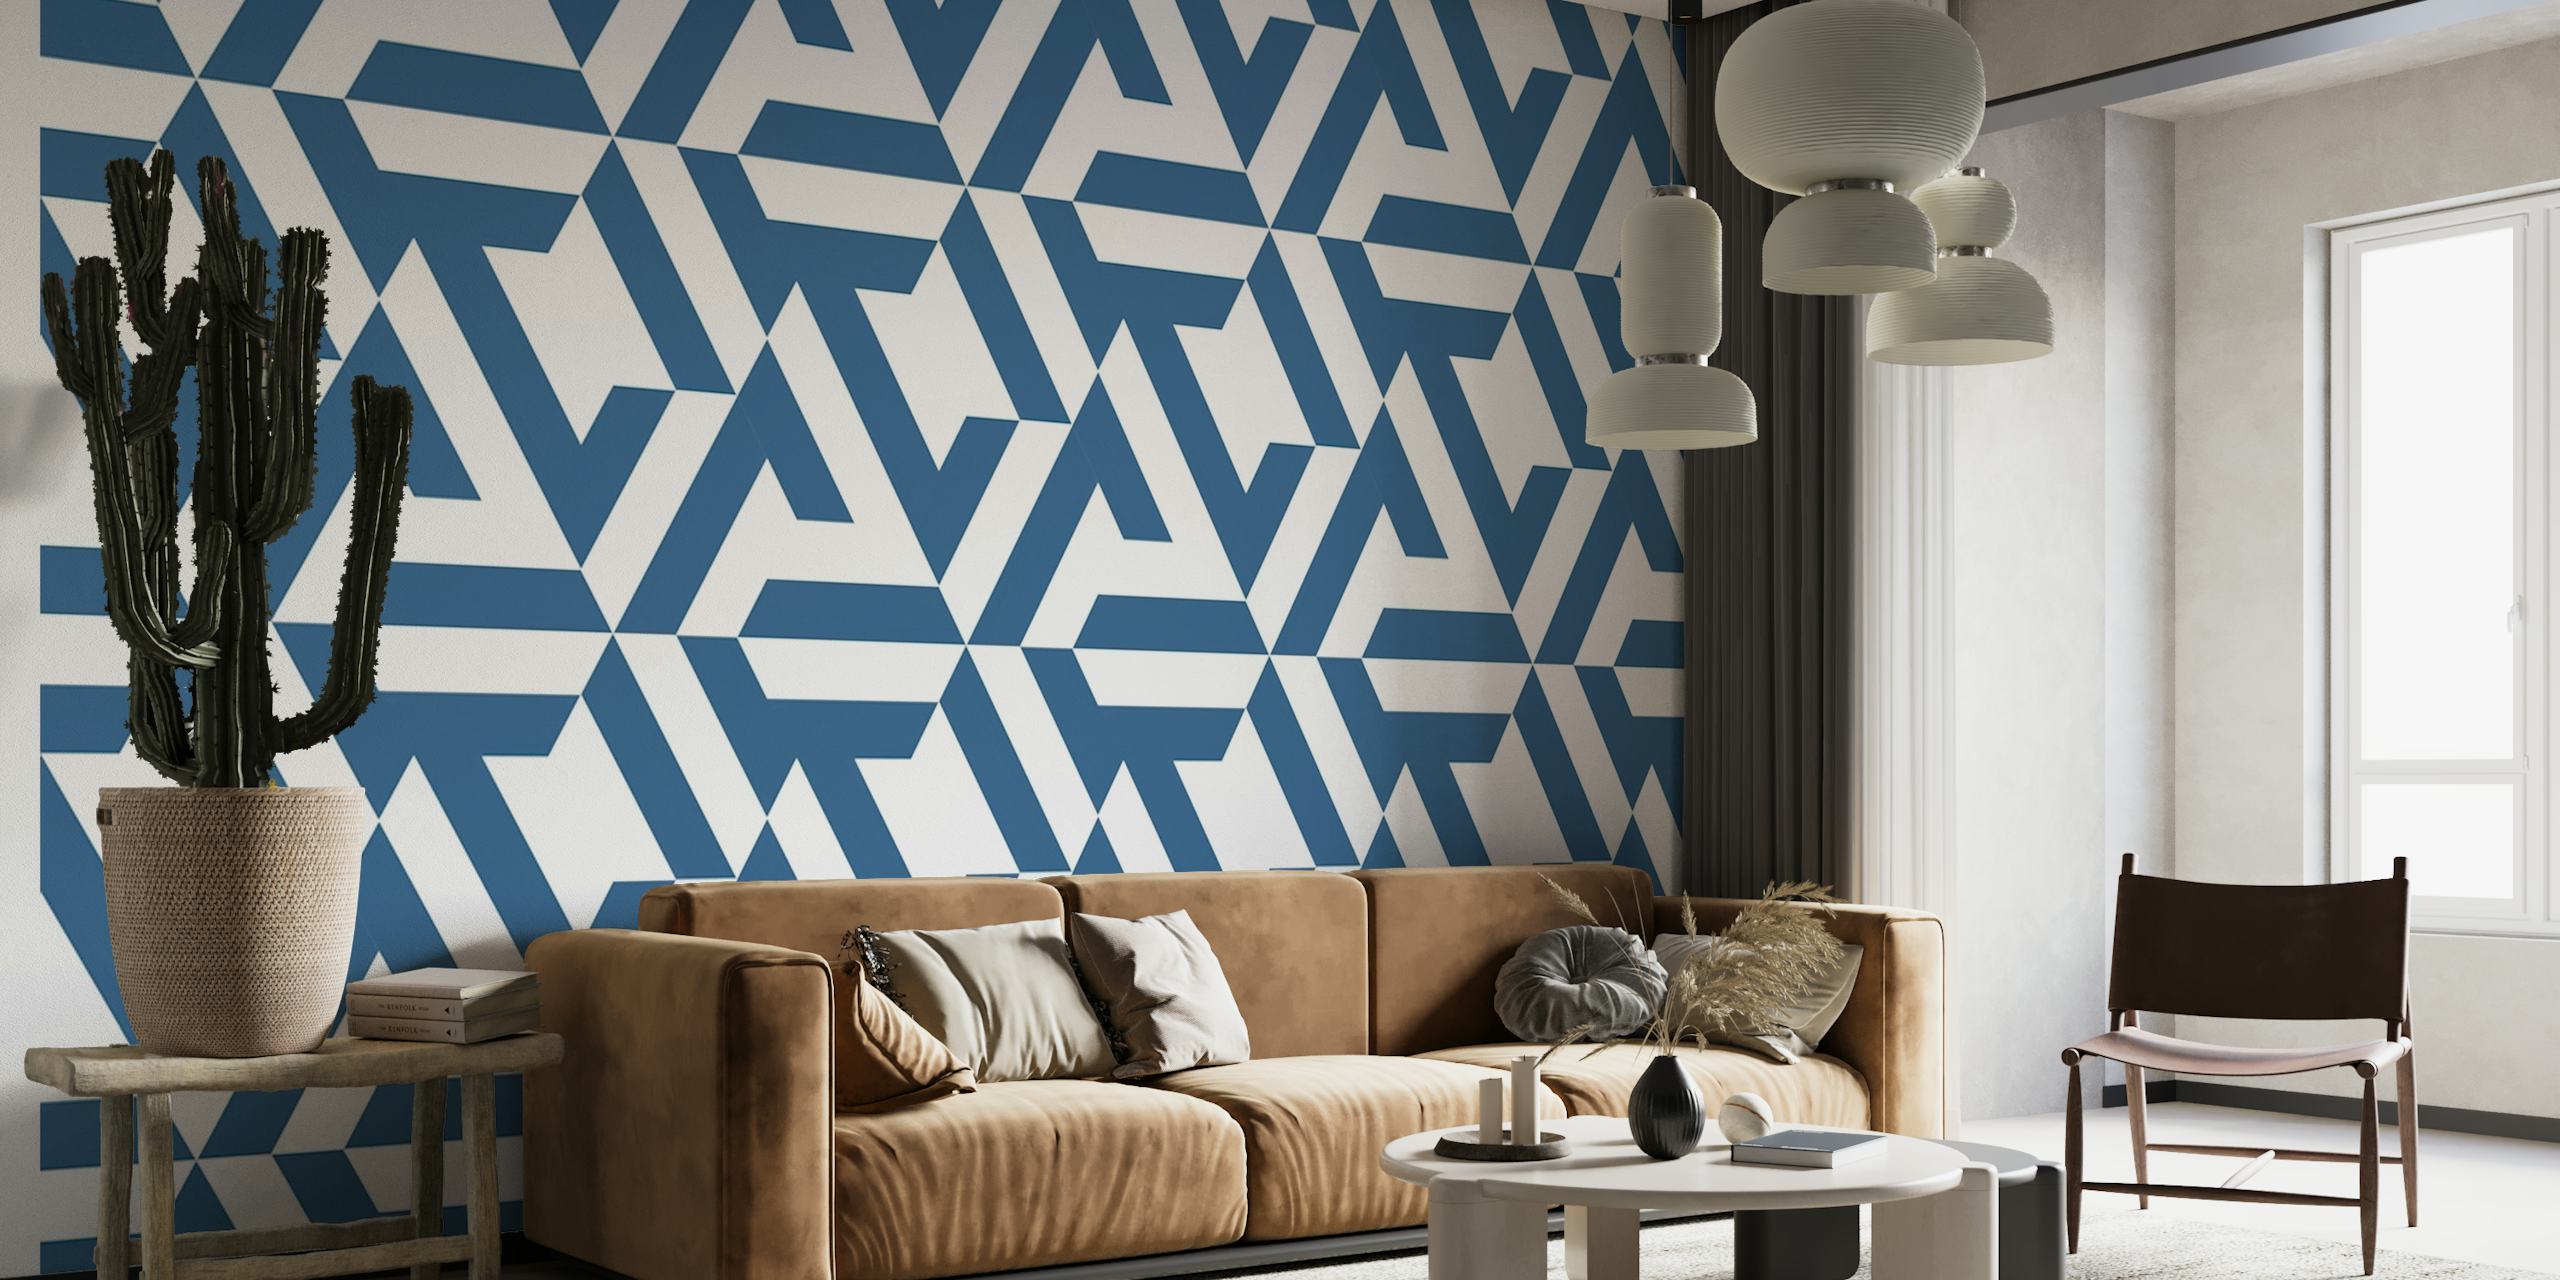 Papier peint mural sticker de carreaux hexagonaux bleu marine et blanc